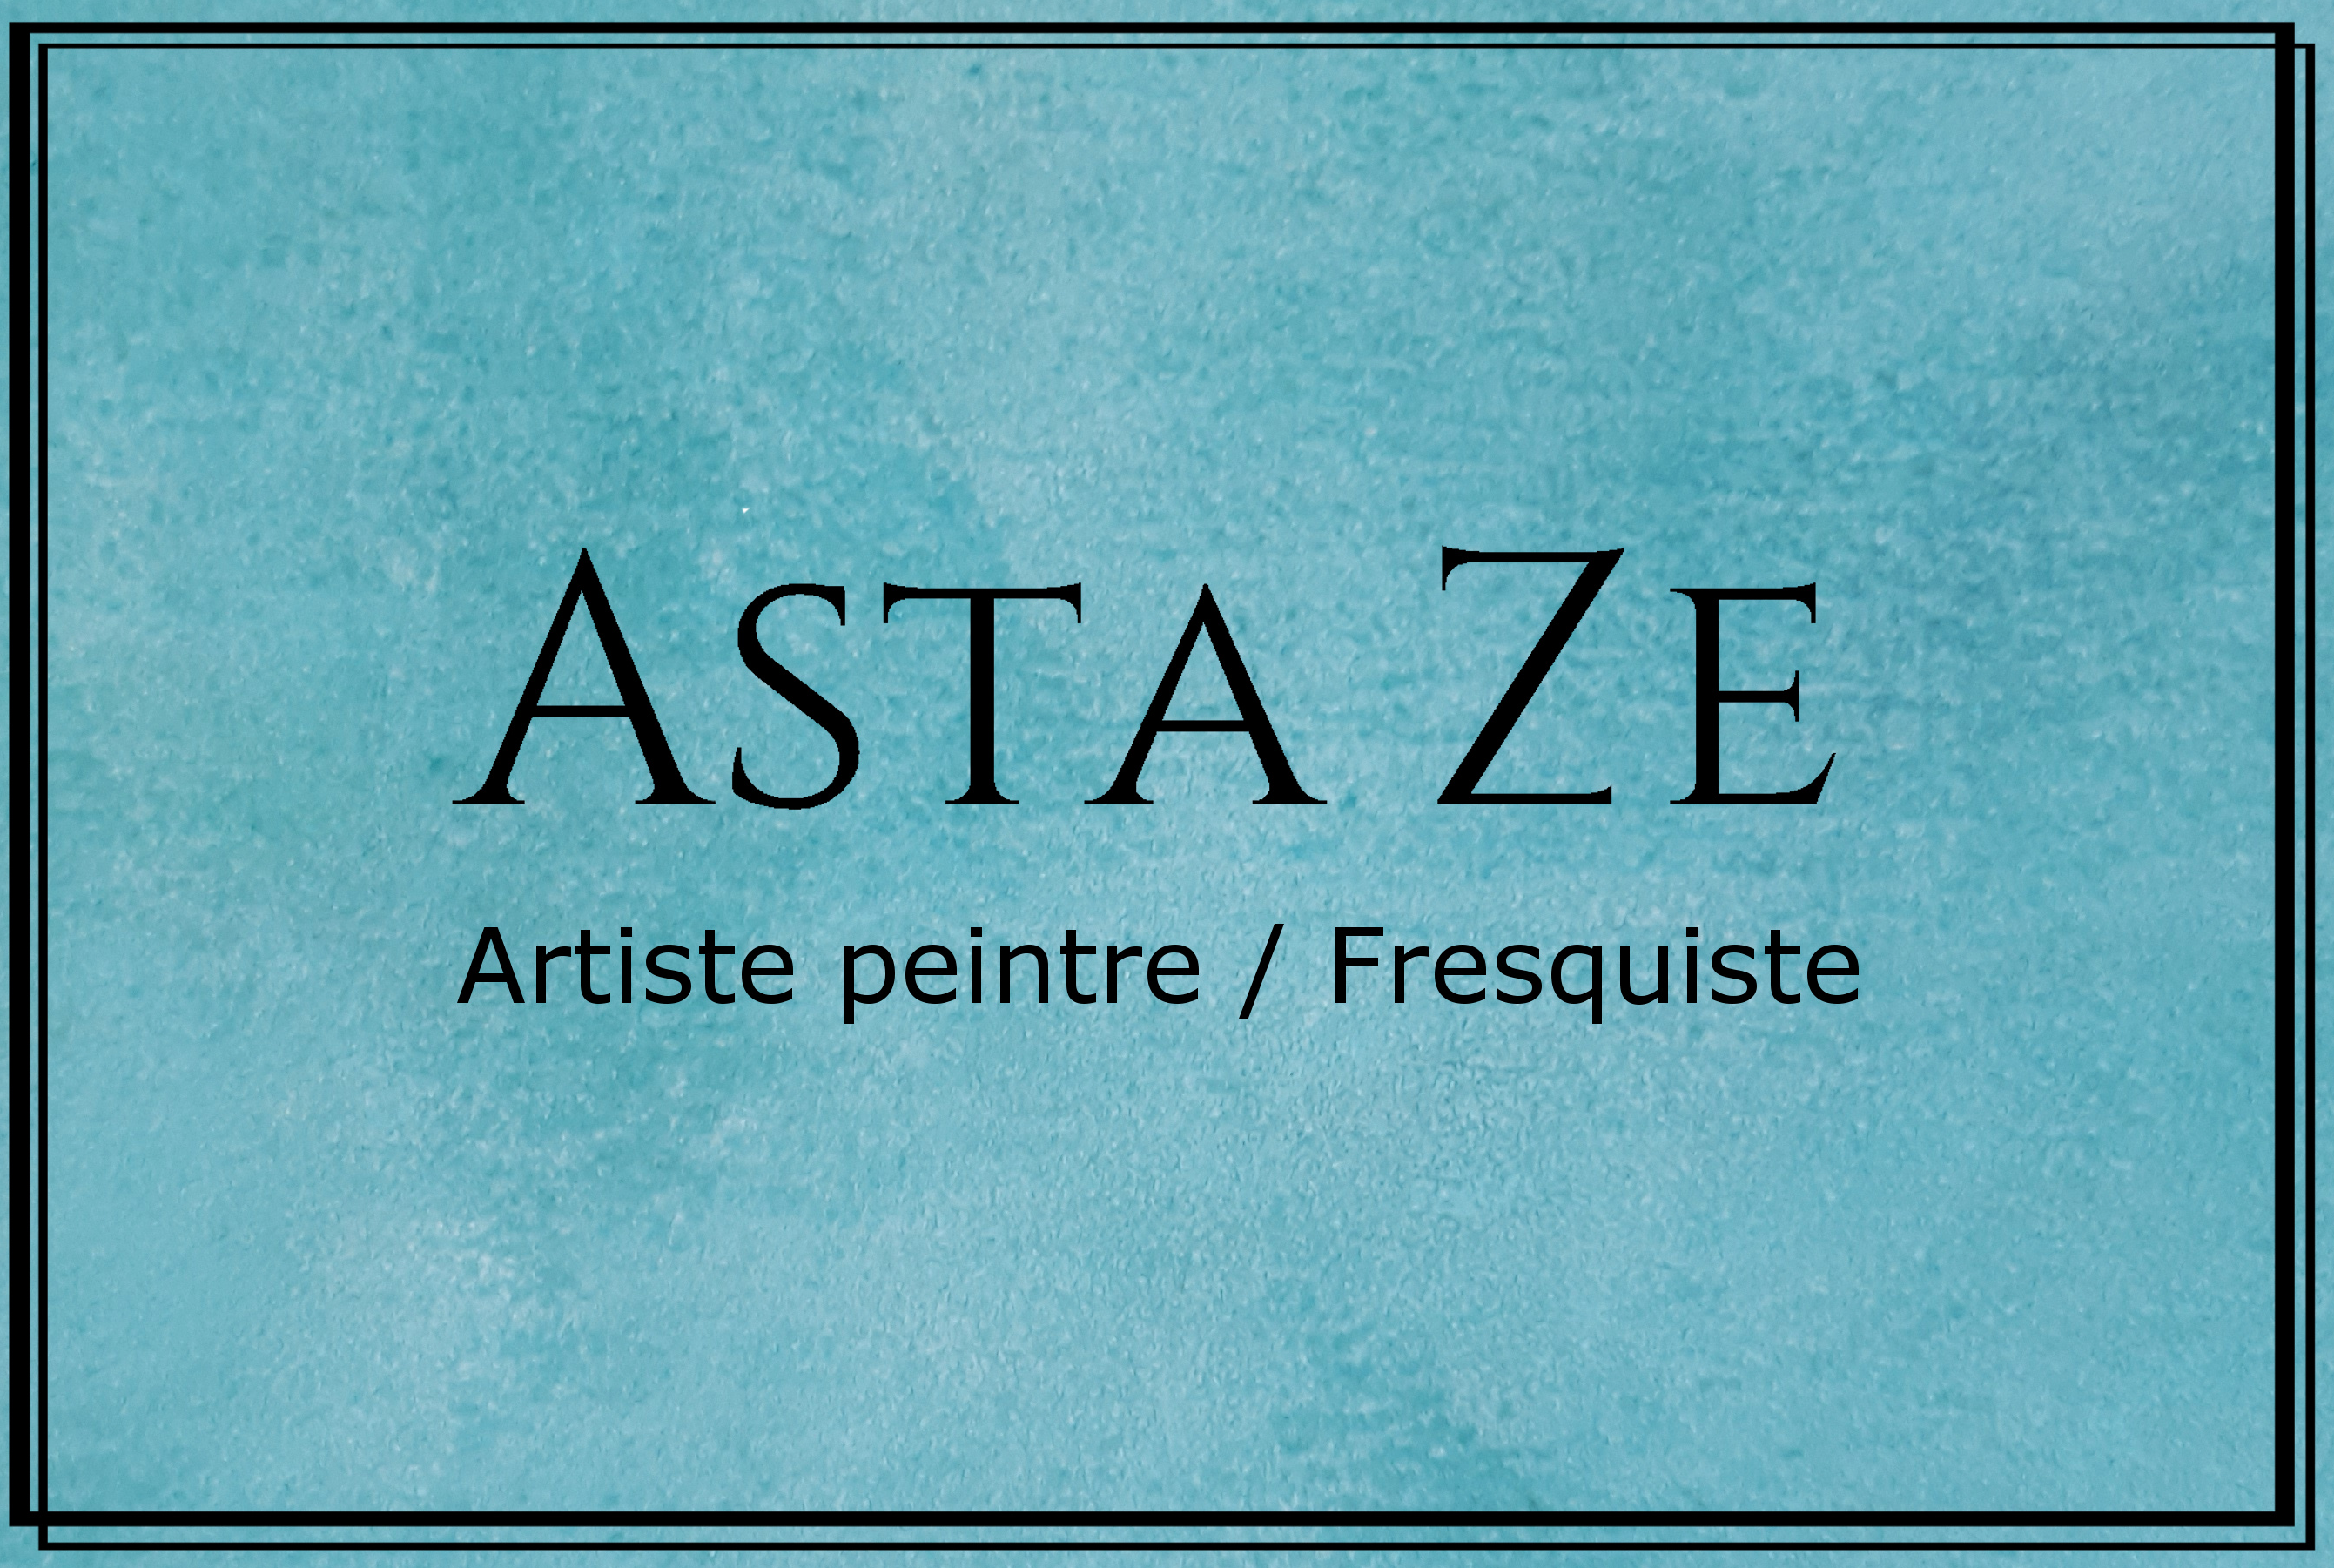 Asta Ze - Artiste peintre / Fresquiste Logo